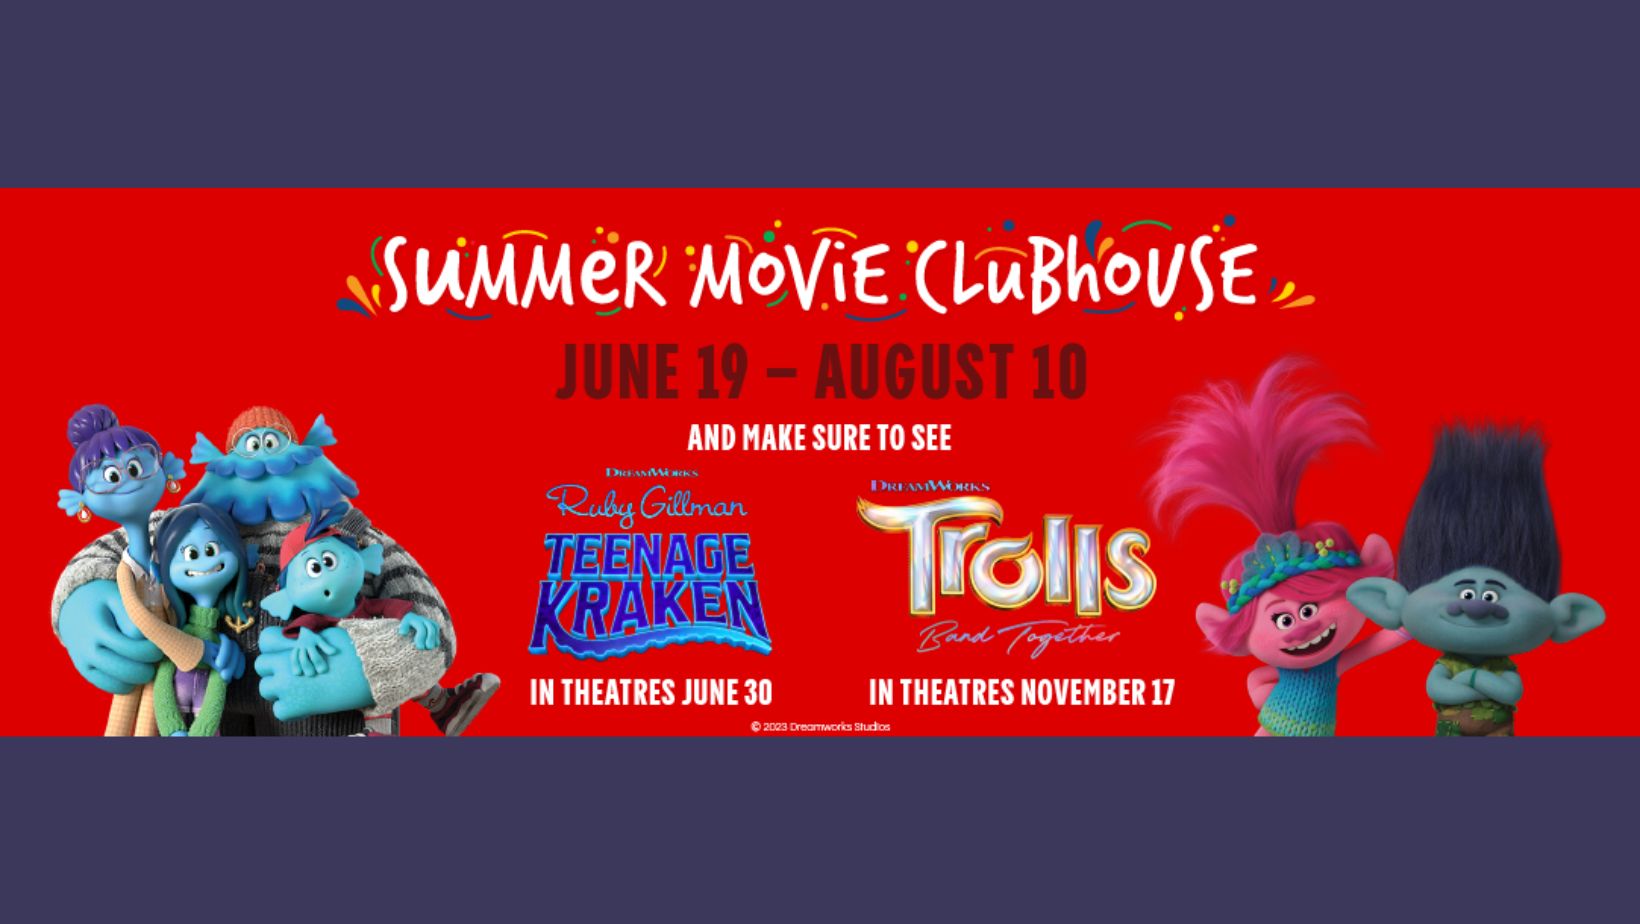 Cinemark Summer Movie Clubhouse Rocket City Mom Huntsville events